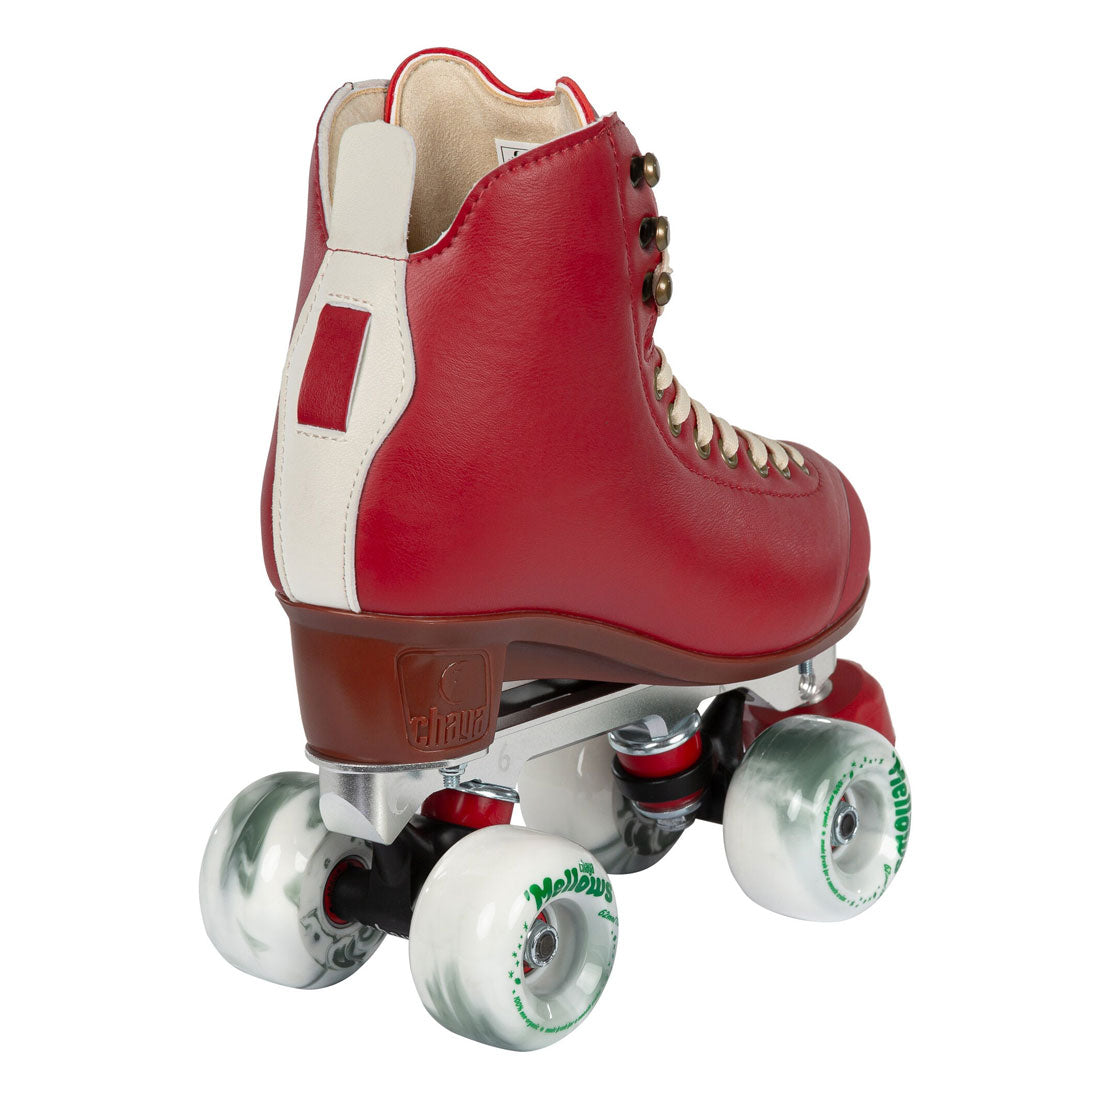 Chaya Melrose Premium Skate - Berry Red Roller Skates